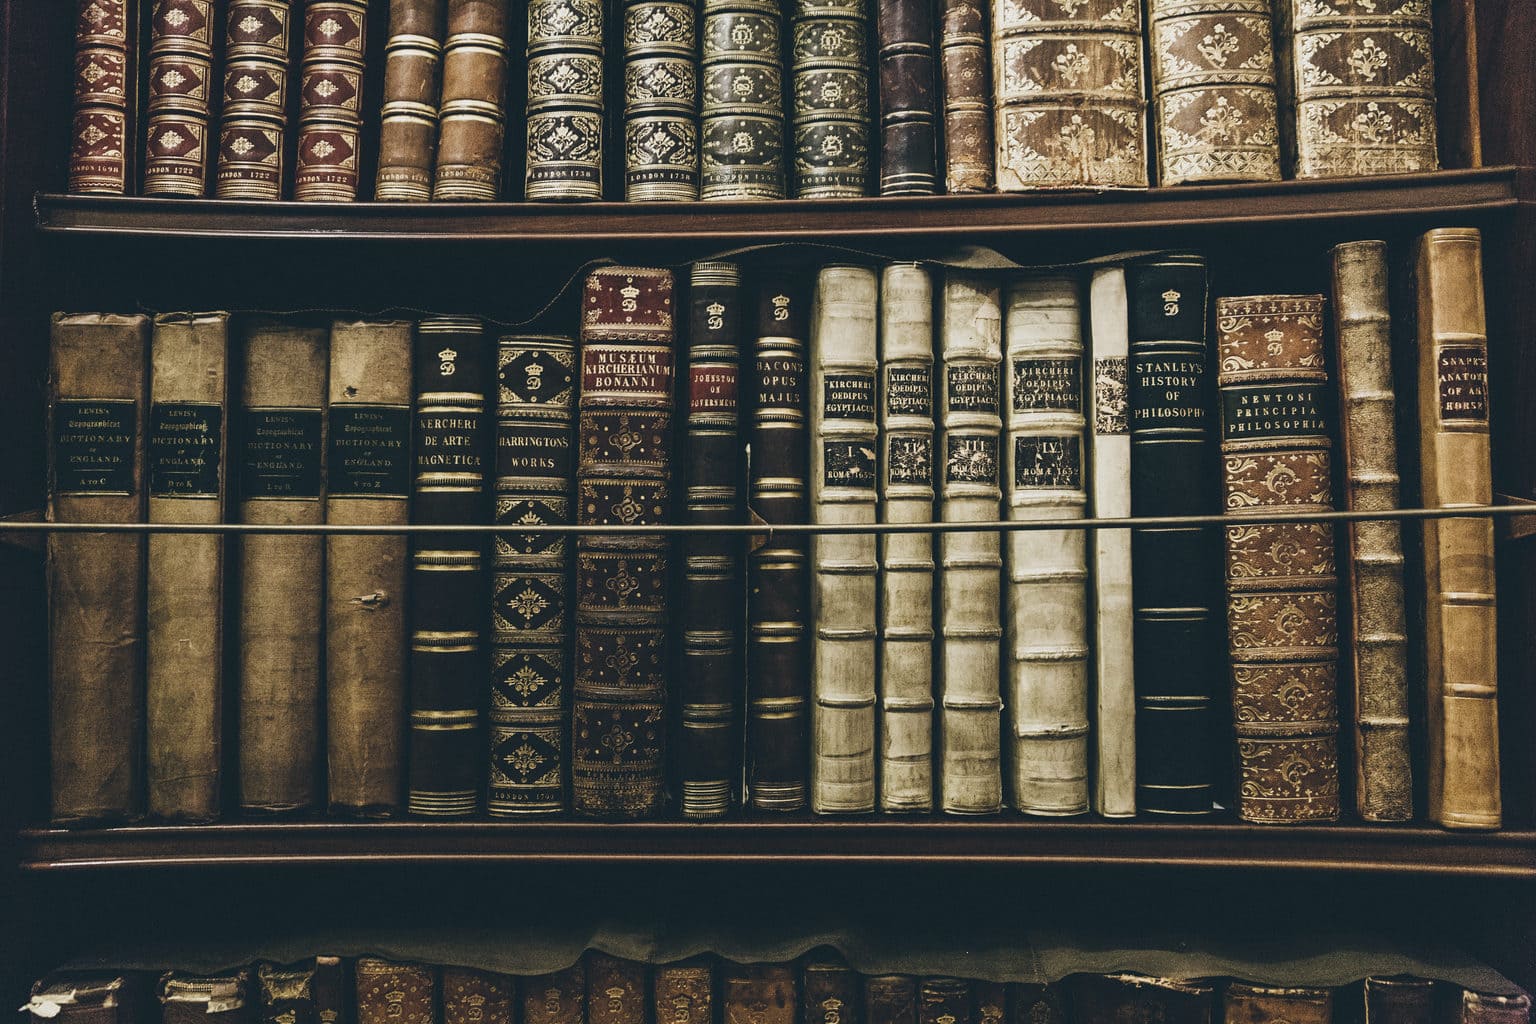 A library shelf full of old, elaborately decorative books